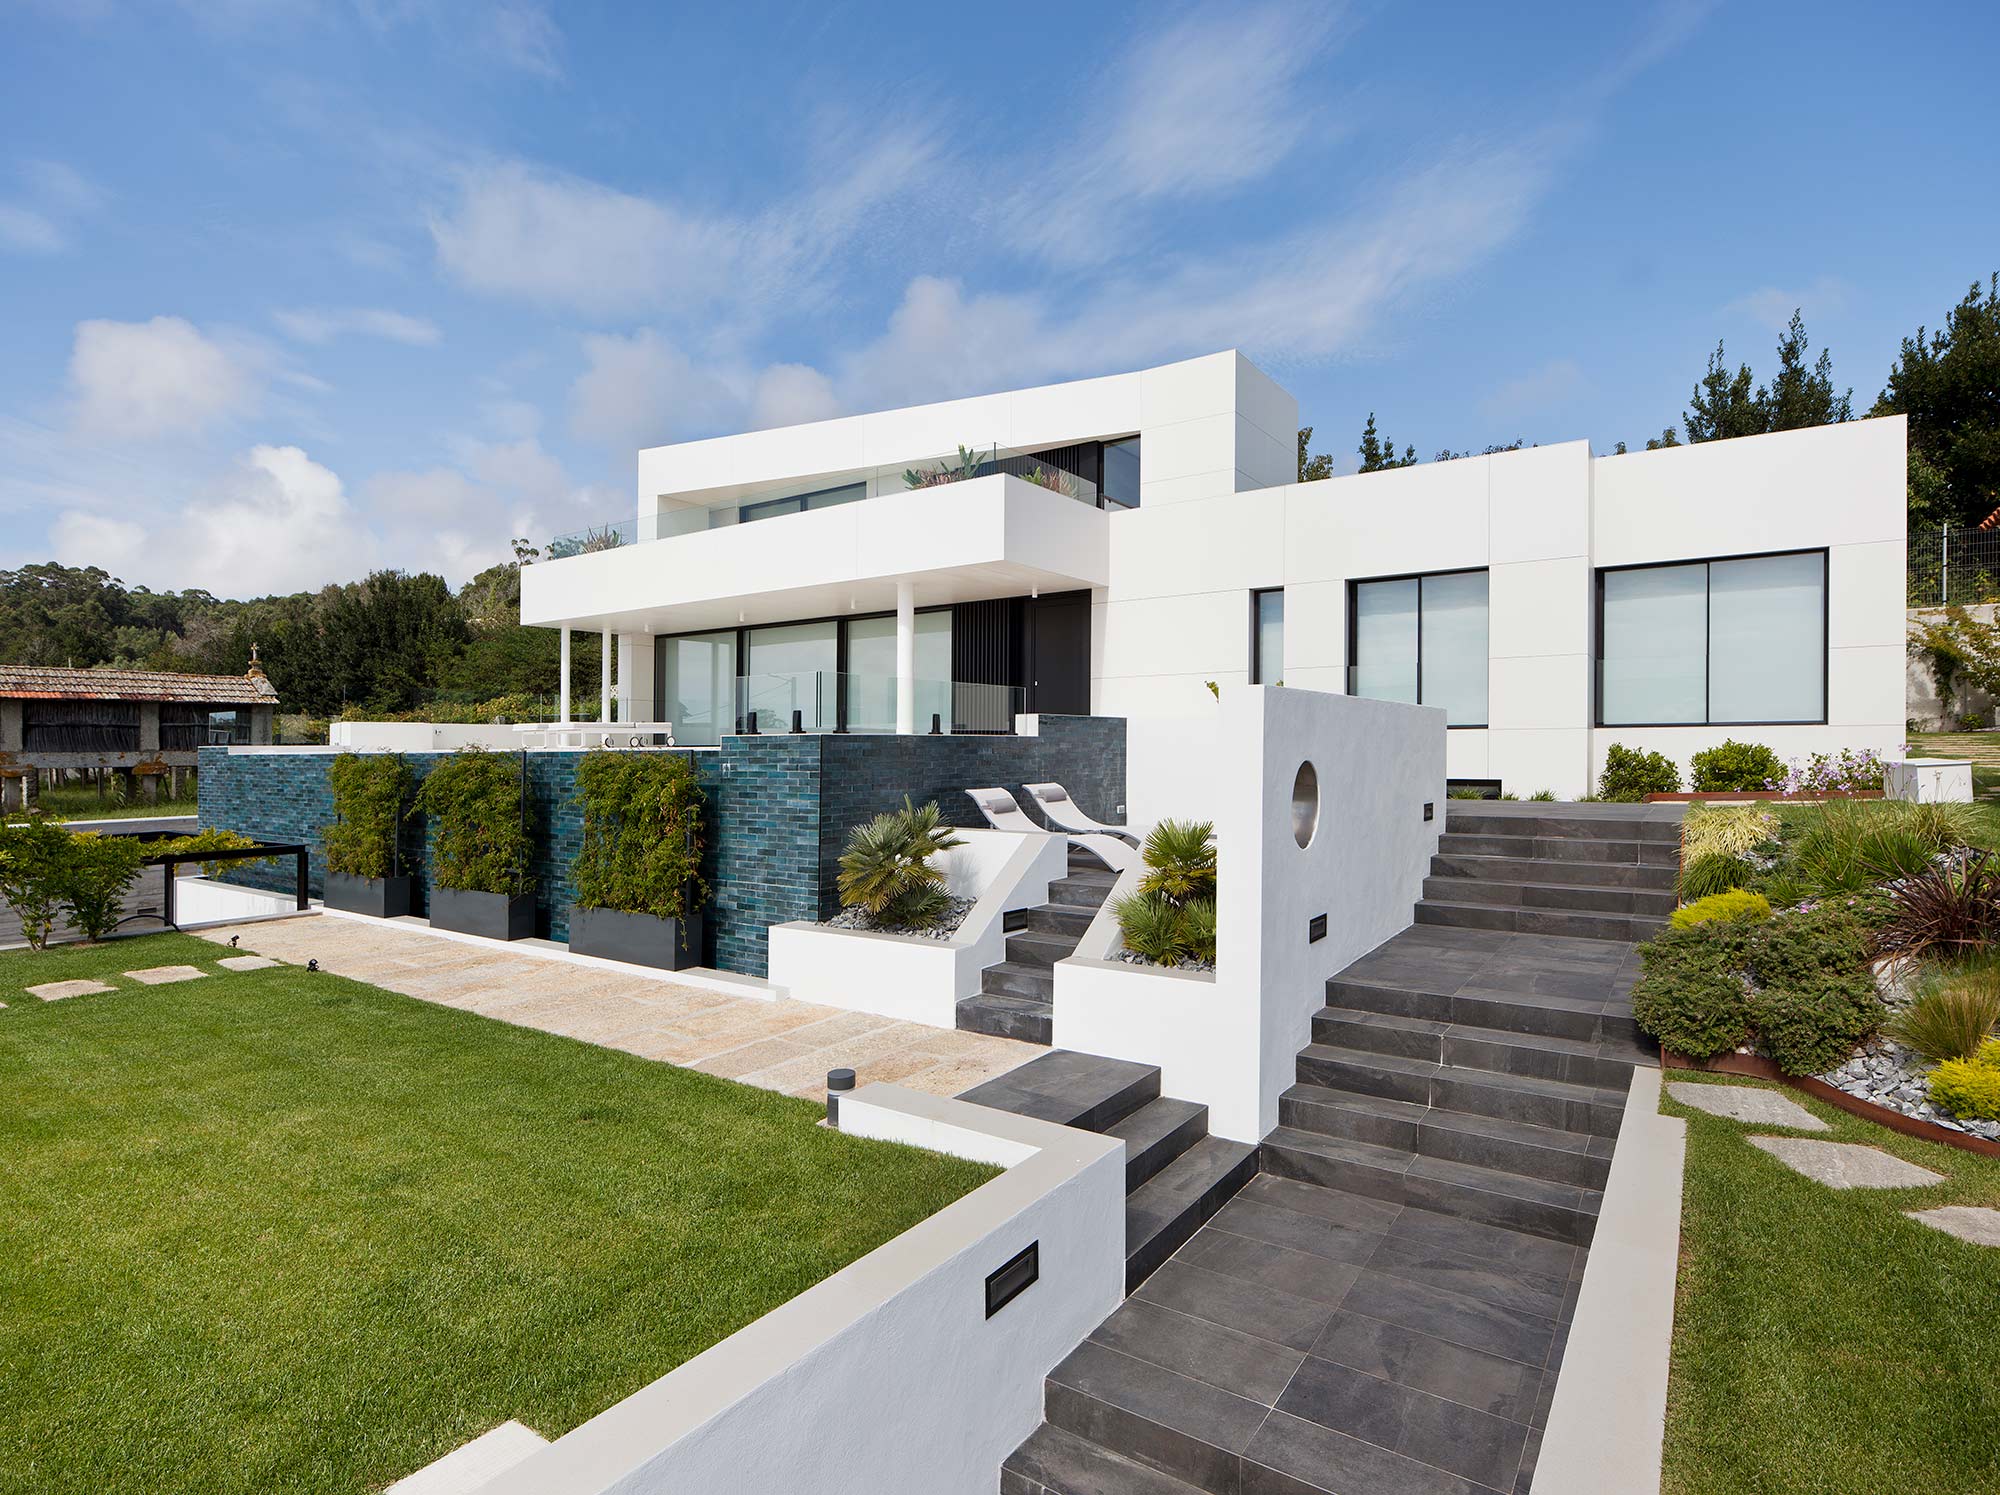 Image of Fachada sanxenxo 27 in A sustainable, avant-garde façade for a house with a contemporary design in Portugal - Cosentino